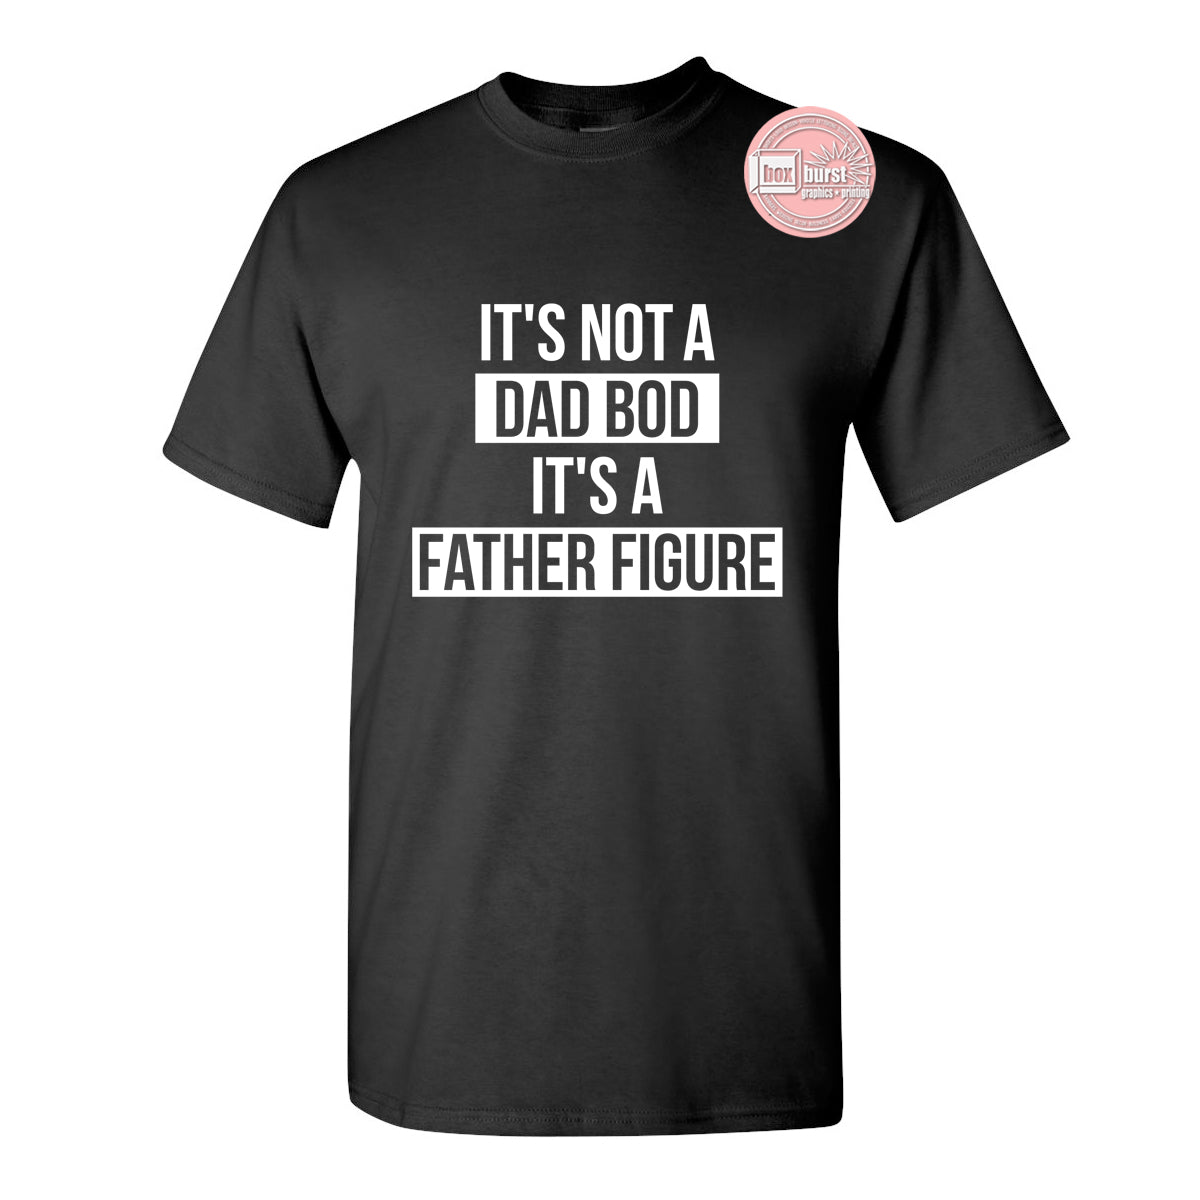 It's not a dad bod it's a father figure unisex gildan tee